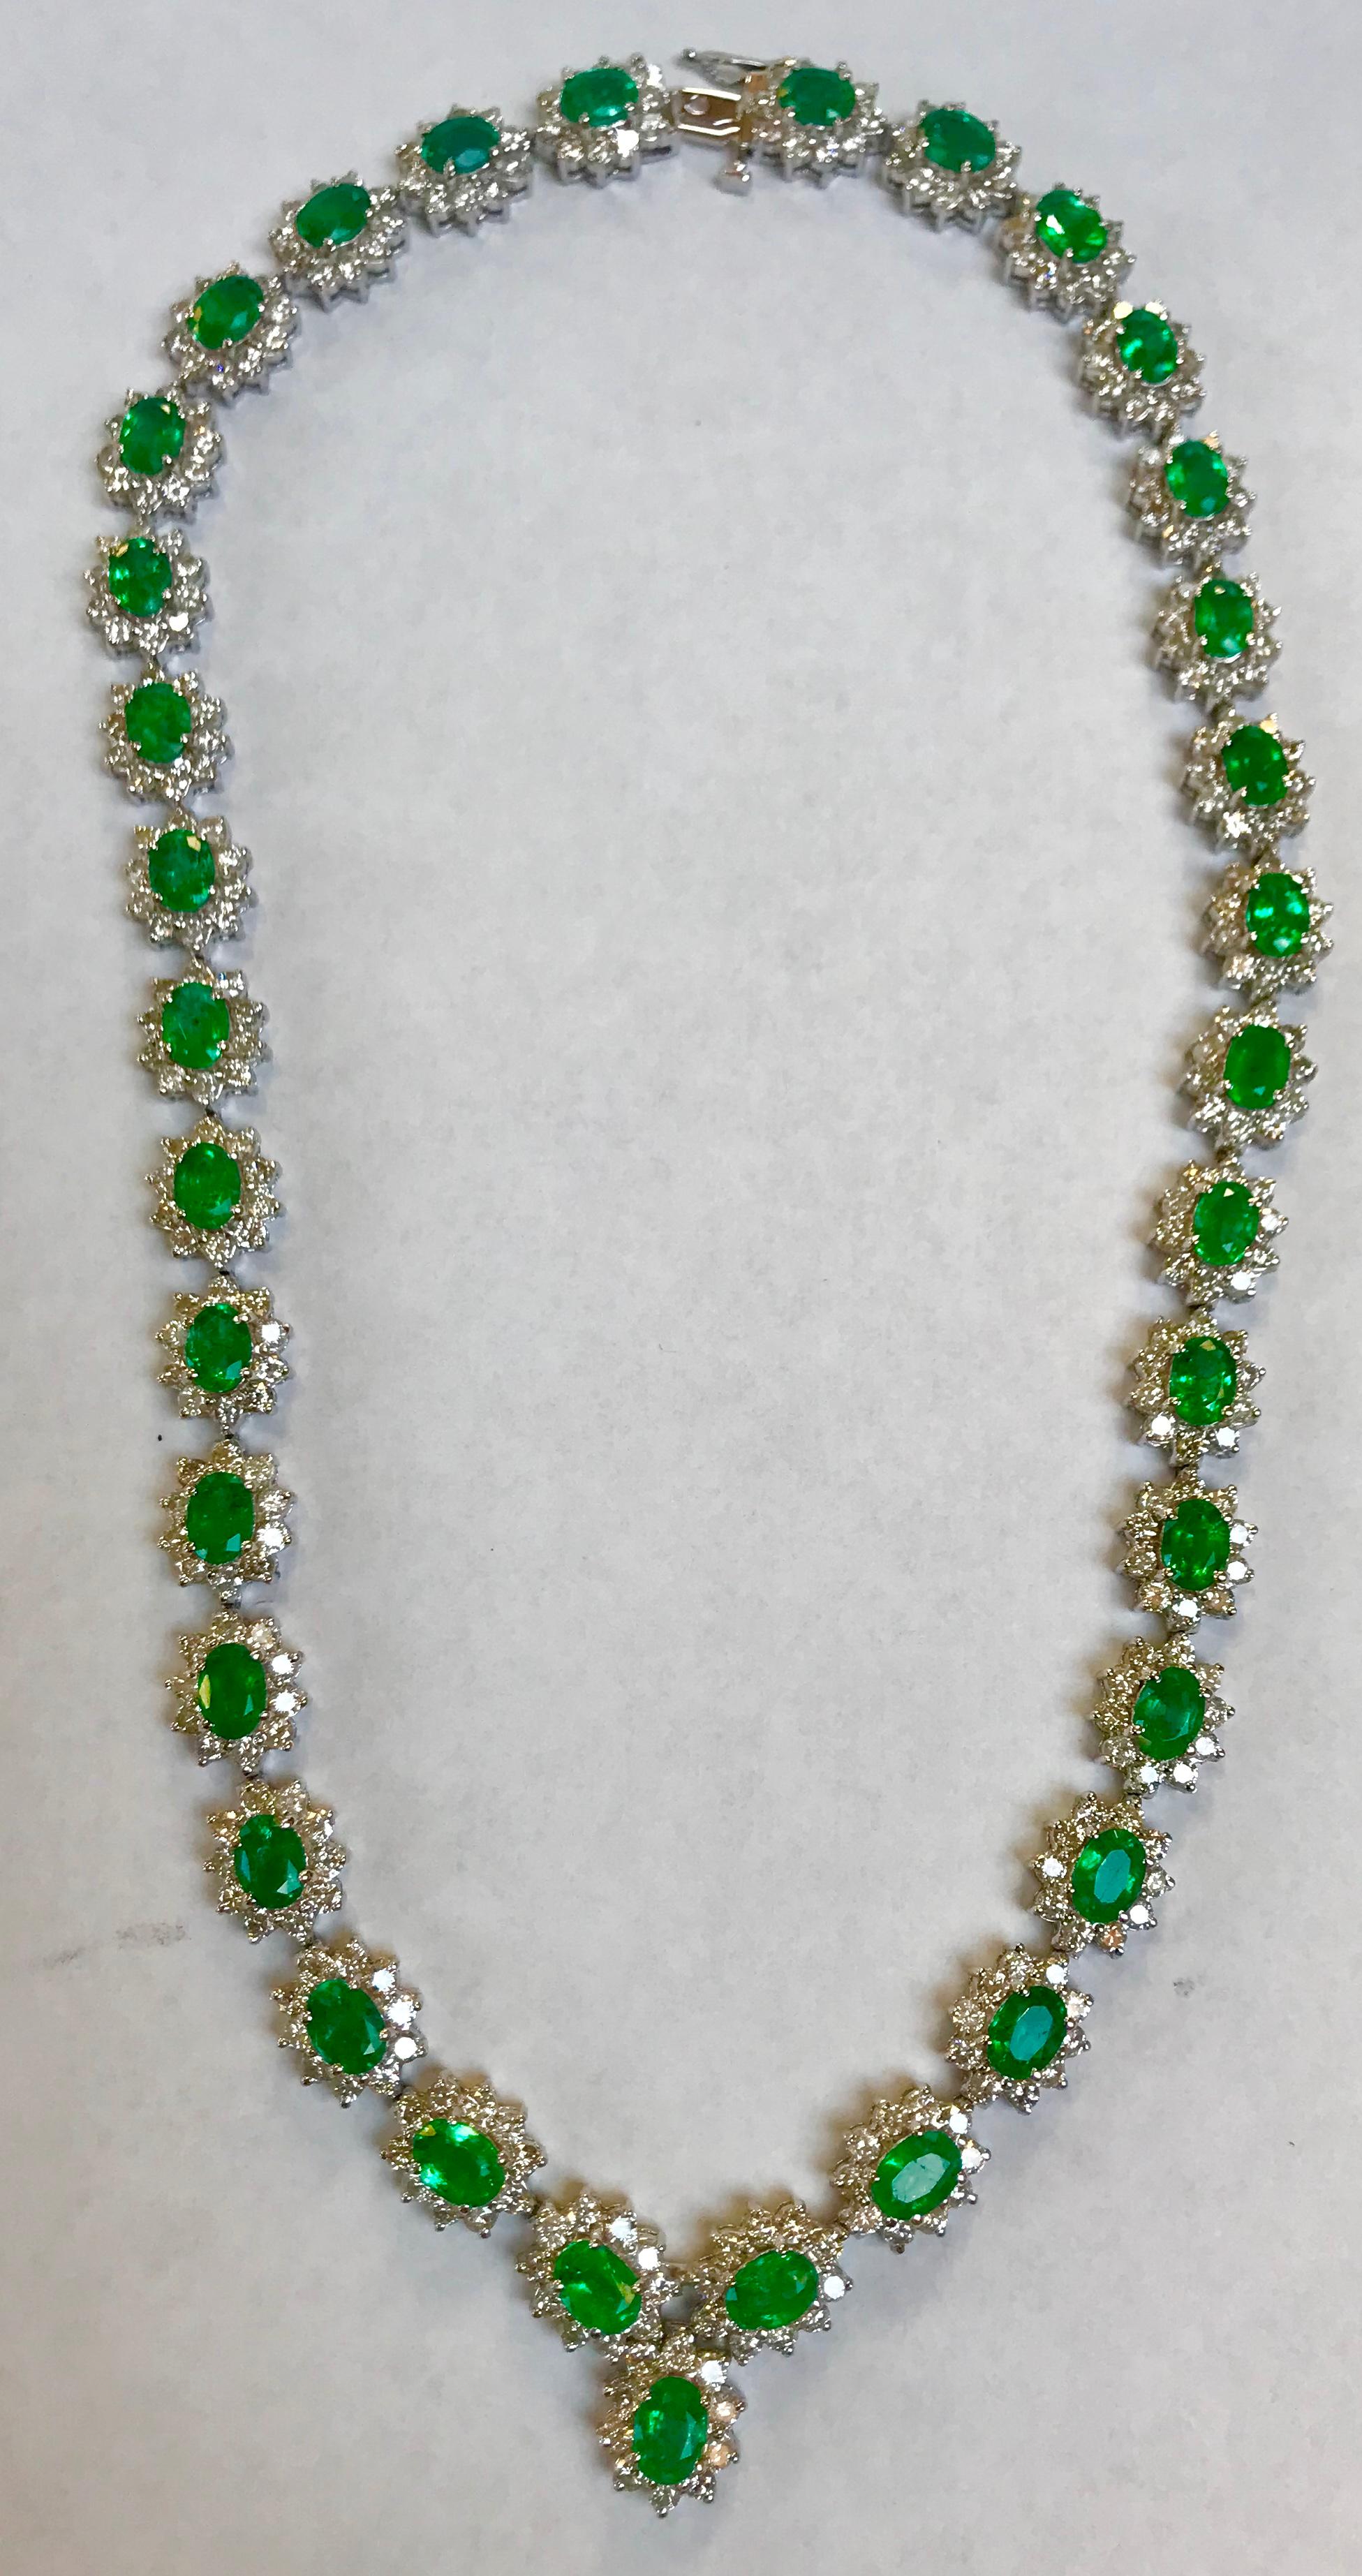 Oval Cut 30 Carat Oval Shape Natural Emerald & 23 Carat Diamond Necklace in 18 Karat Gold For Sale